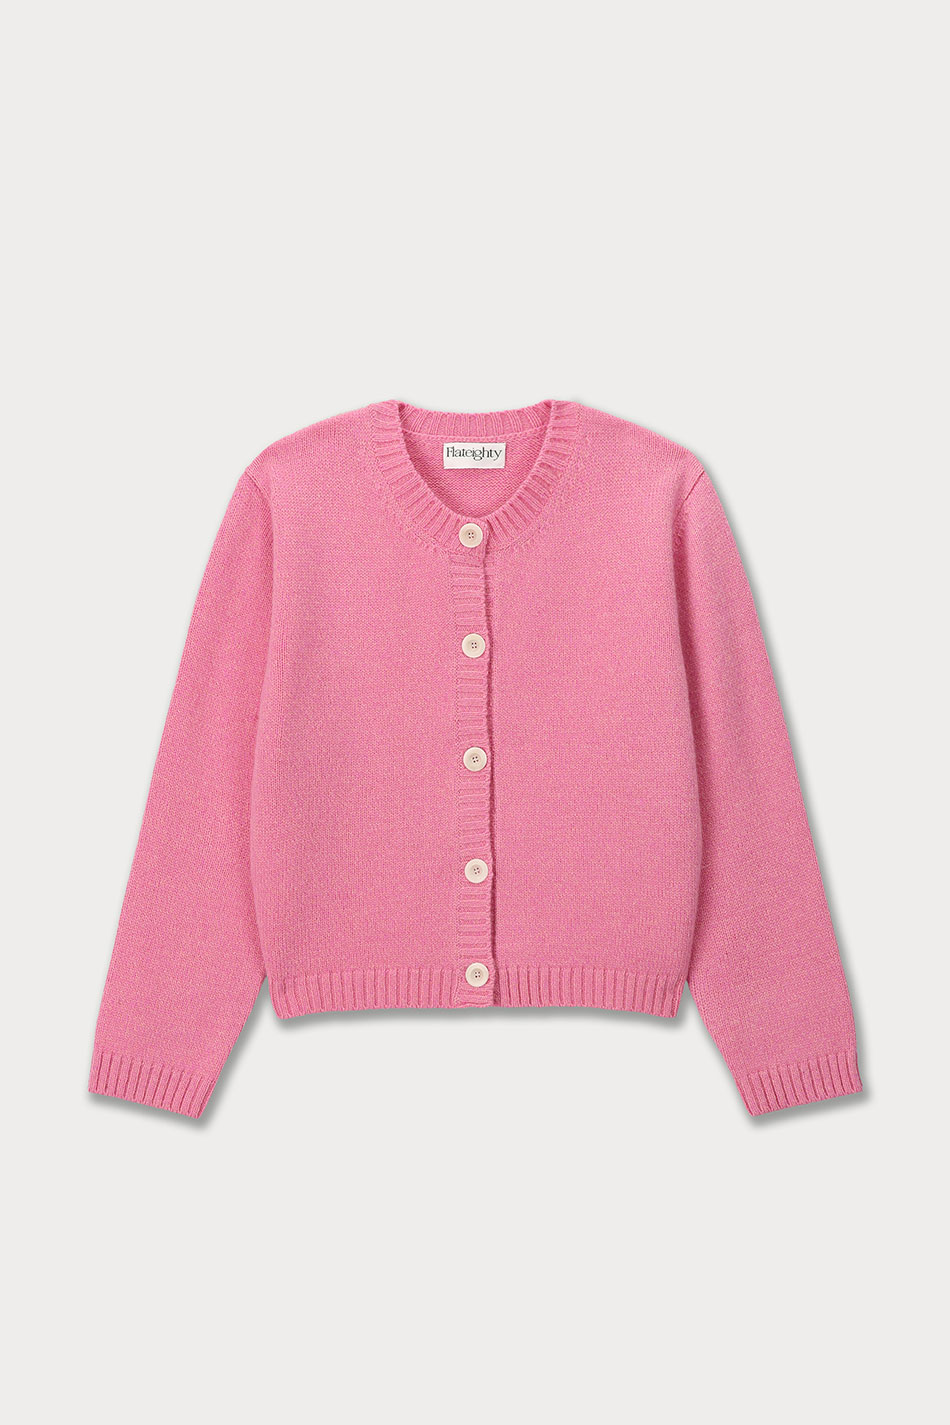 2nd / Picolo Knit (Pink)